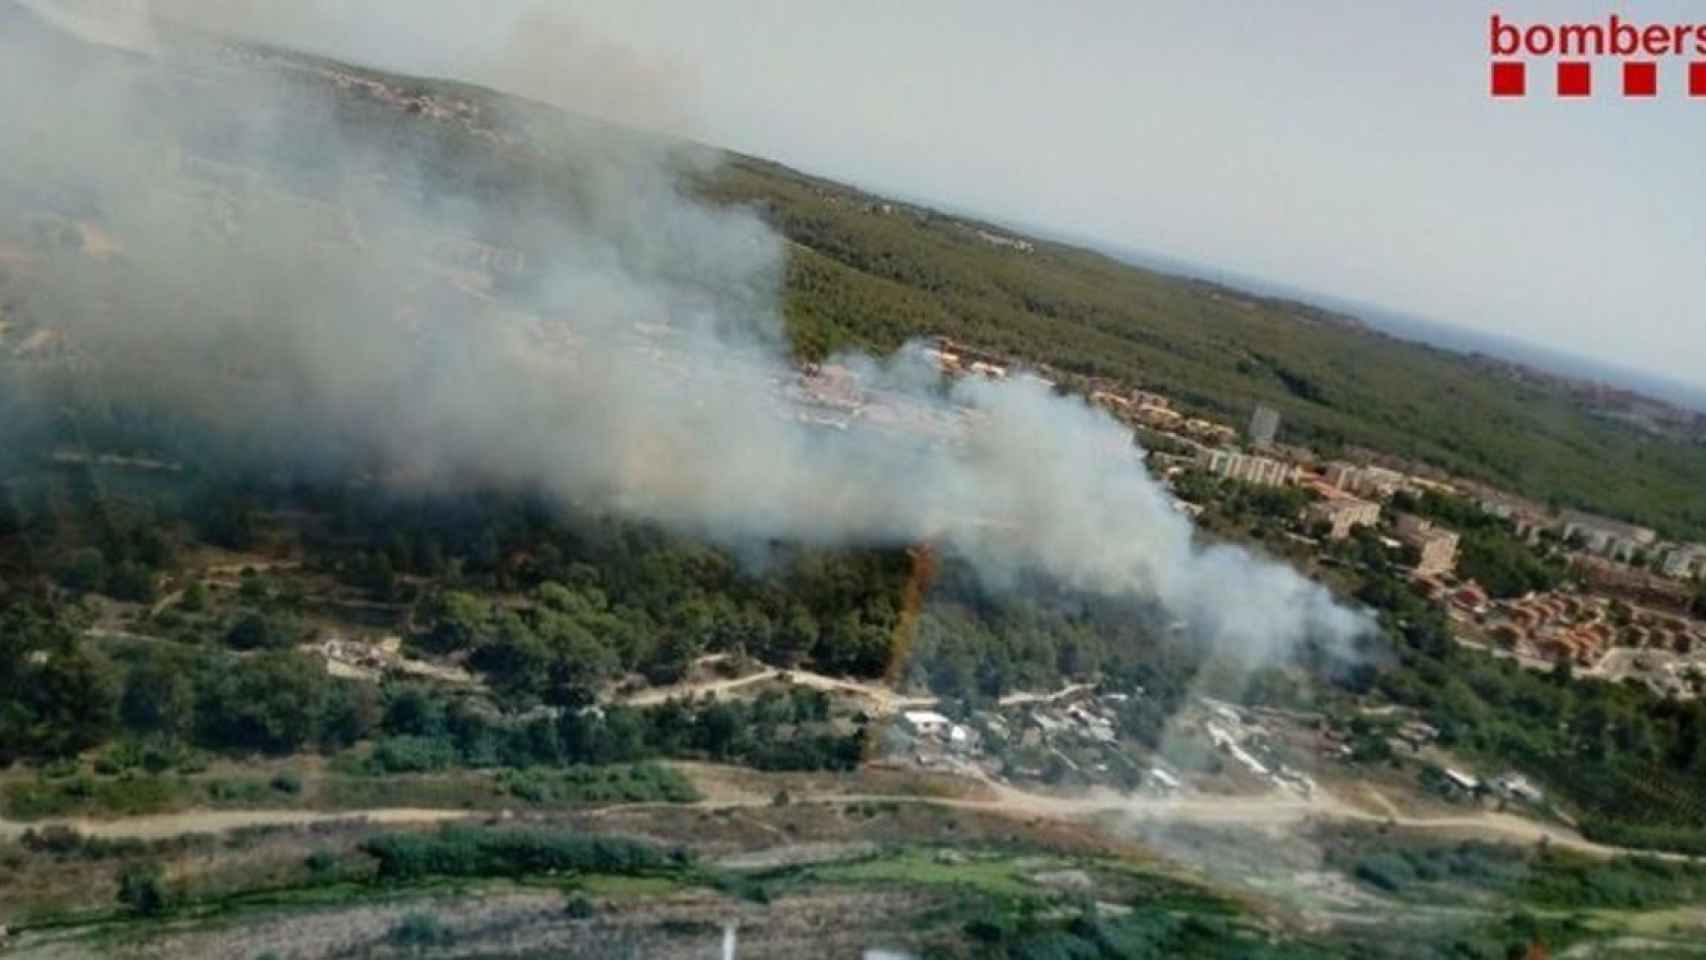 La columna de humo sobre el incendio forestal originado en el barrio Sant Salvador de Tarragona / BOMBEROS DE LA GENERALITAT